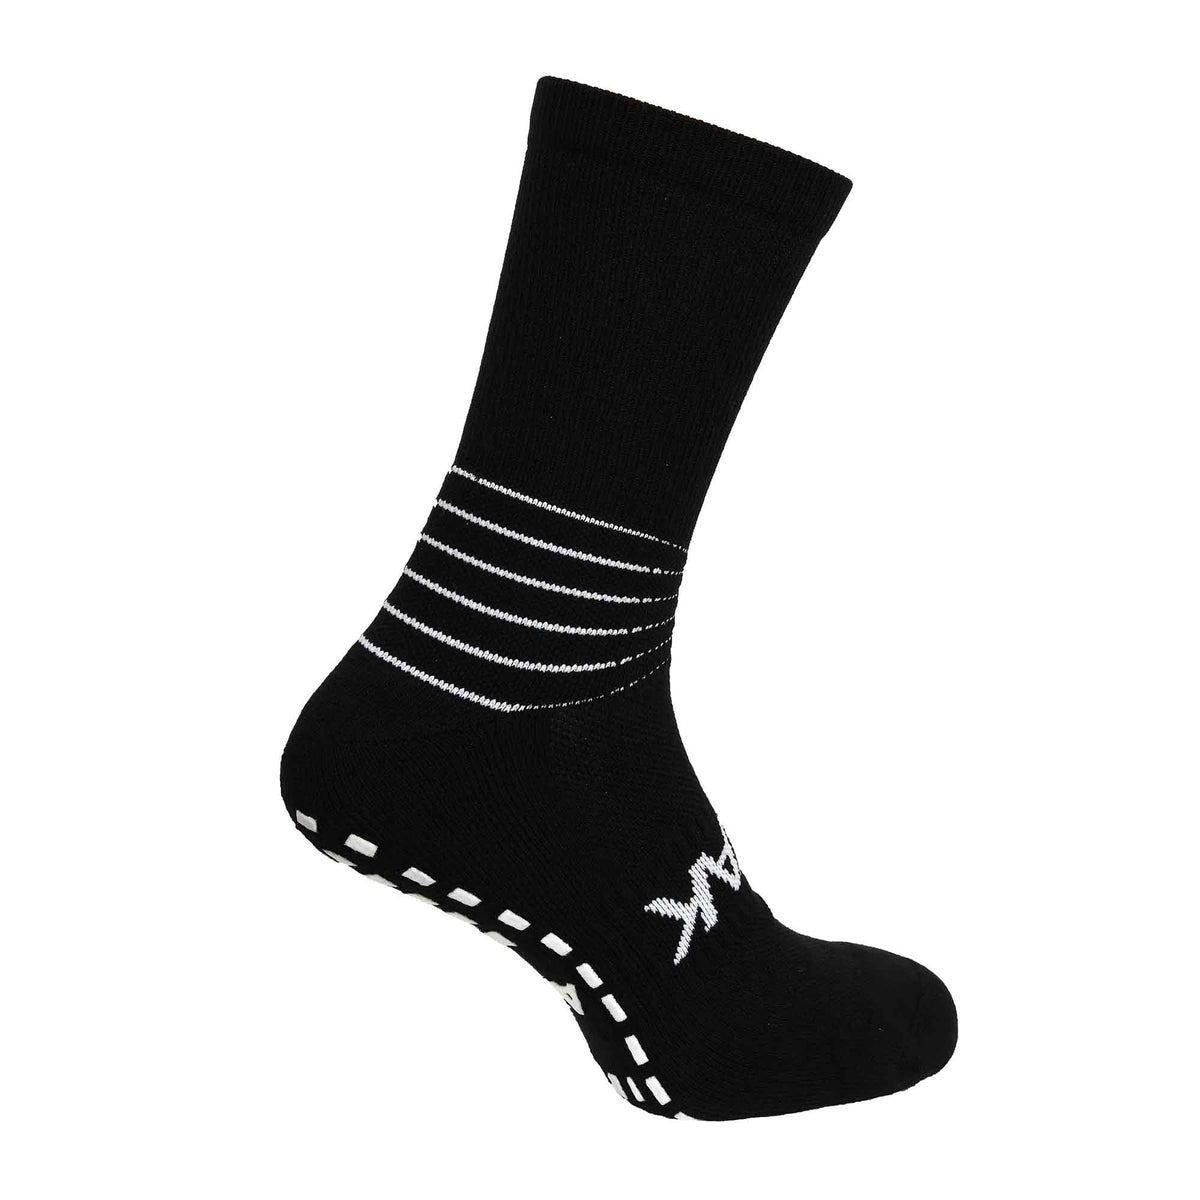 ATAK C-Grip Compression Grip Sock Black